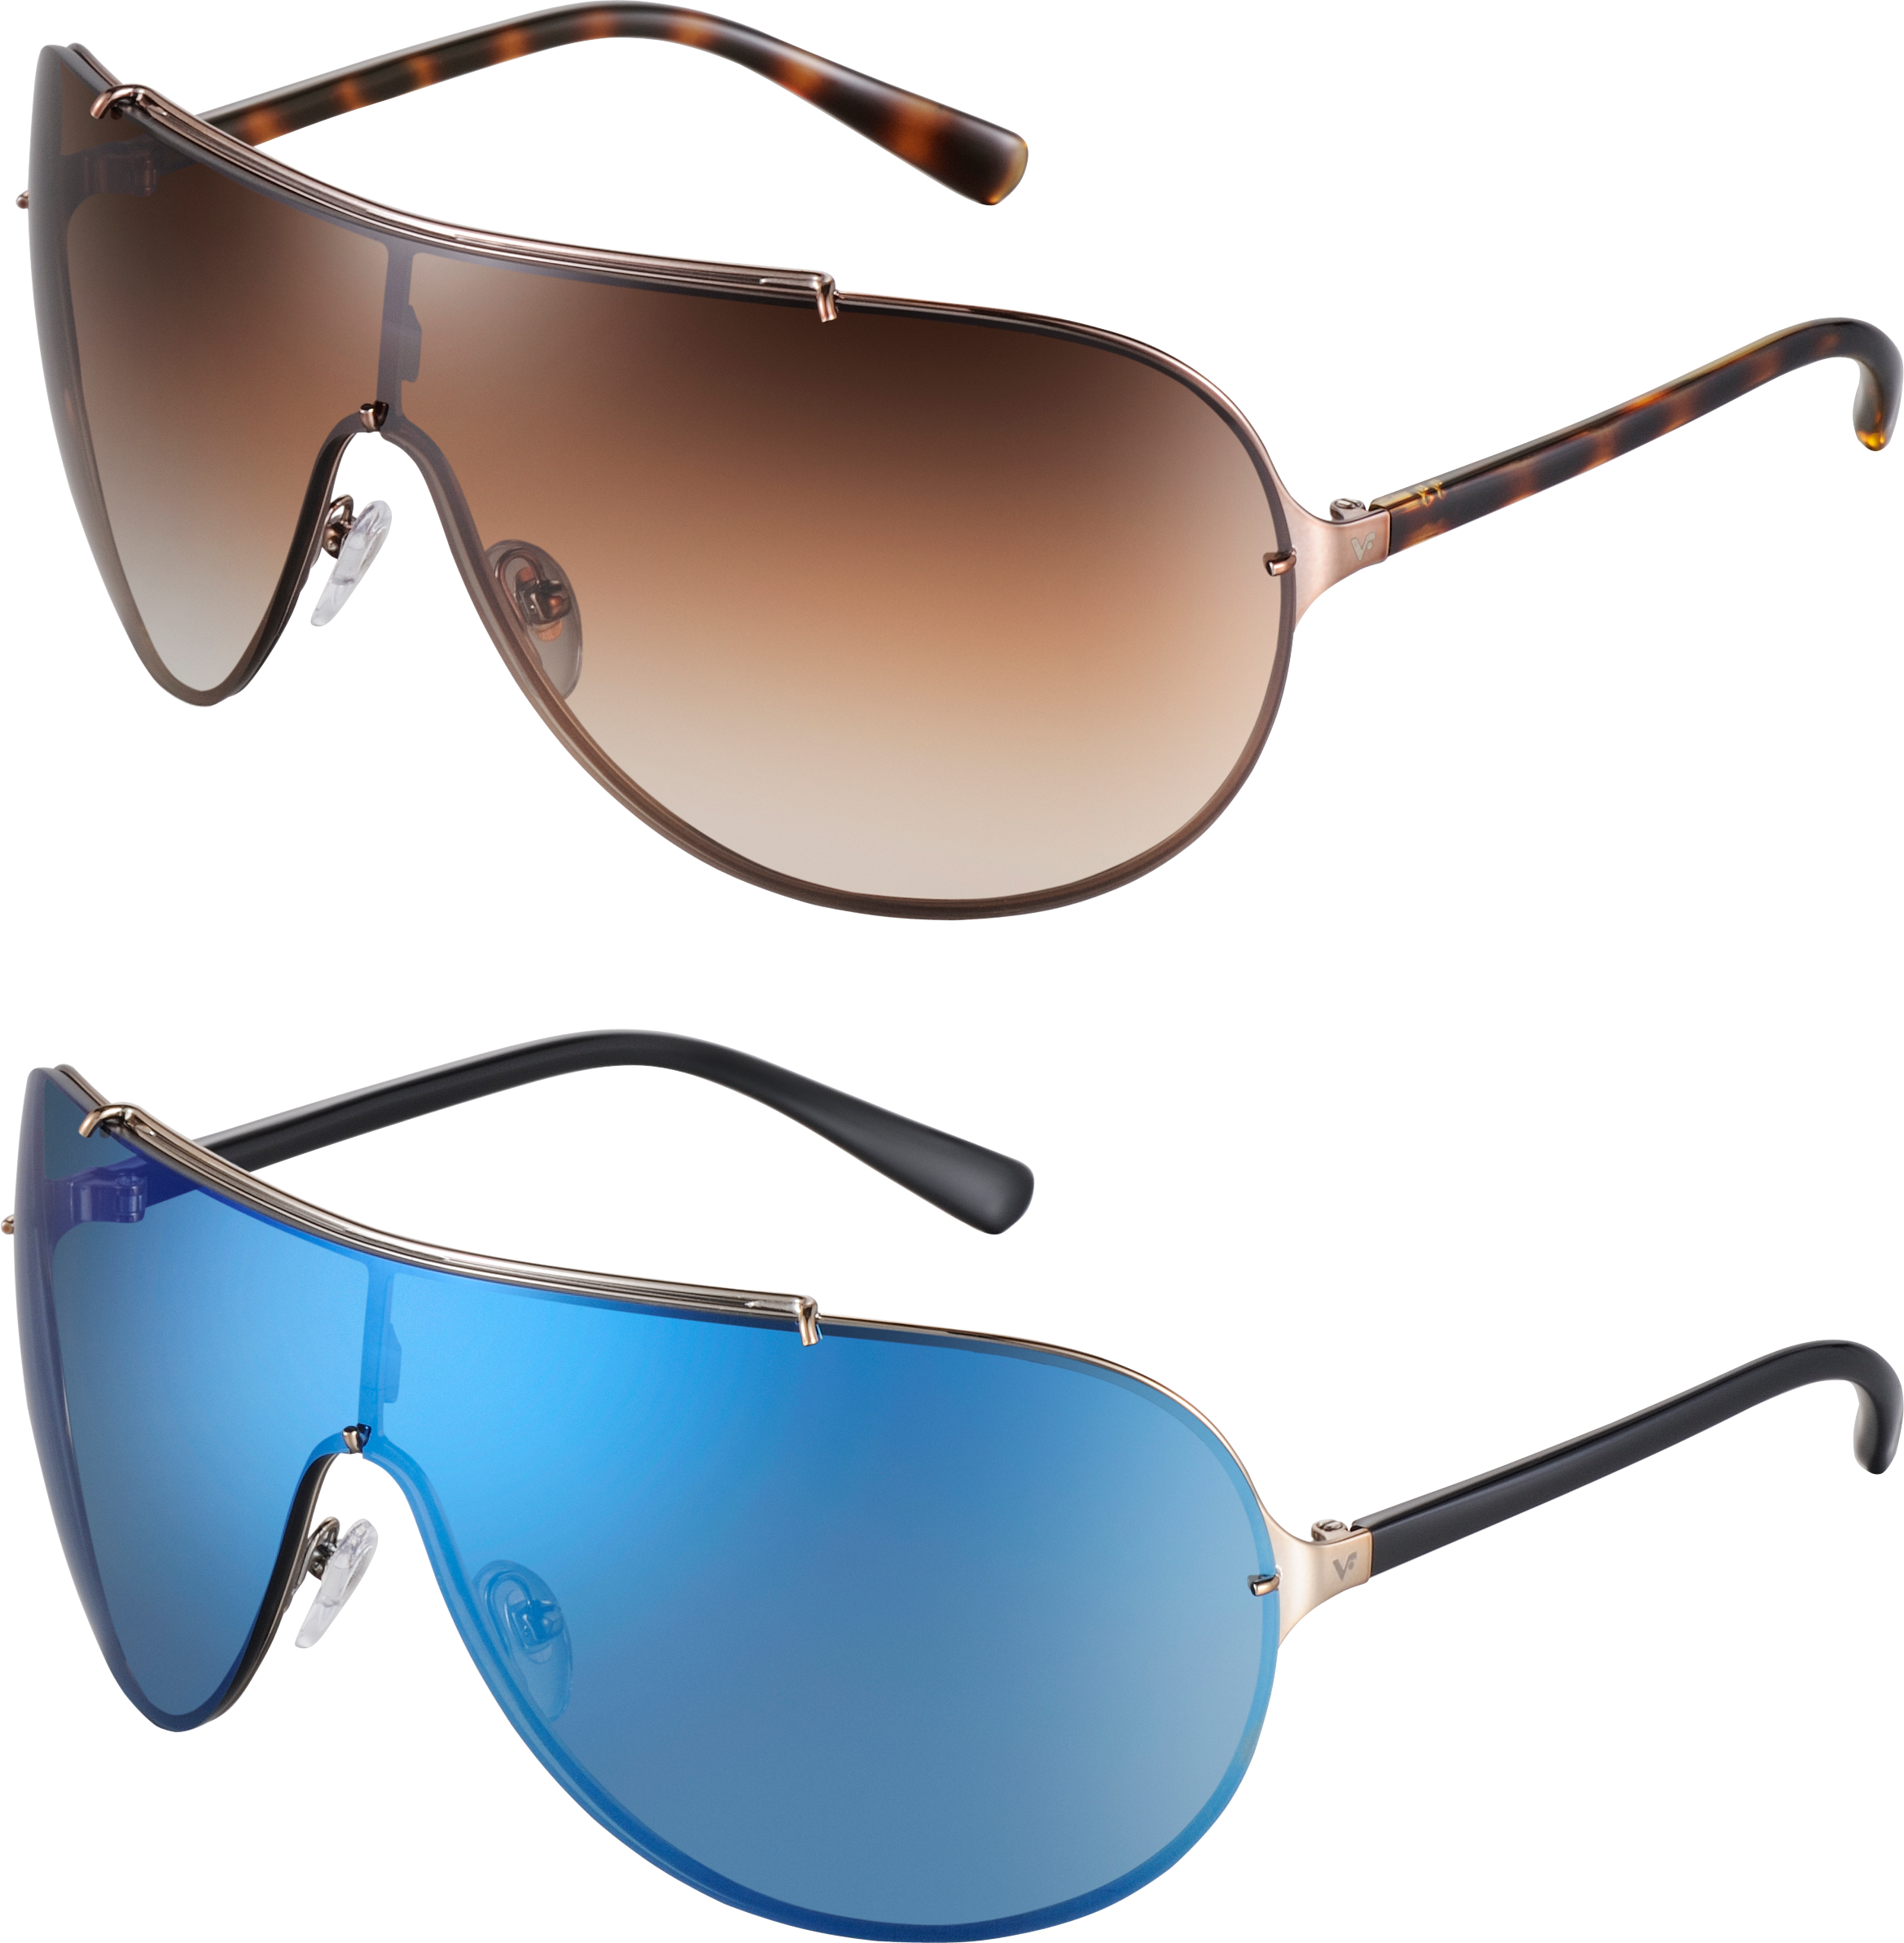 Sunglasses Png Image - Sunglasses, Transparent background PNG HD thumbnail